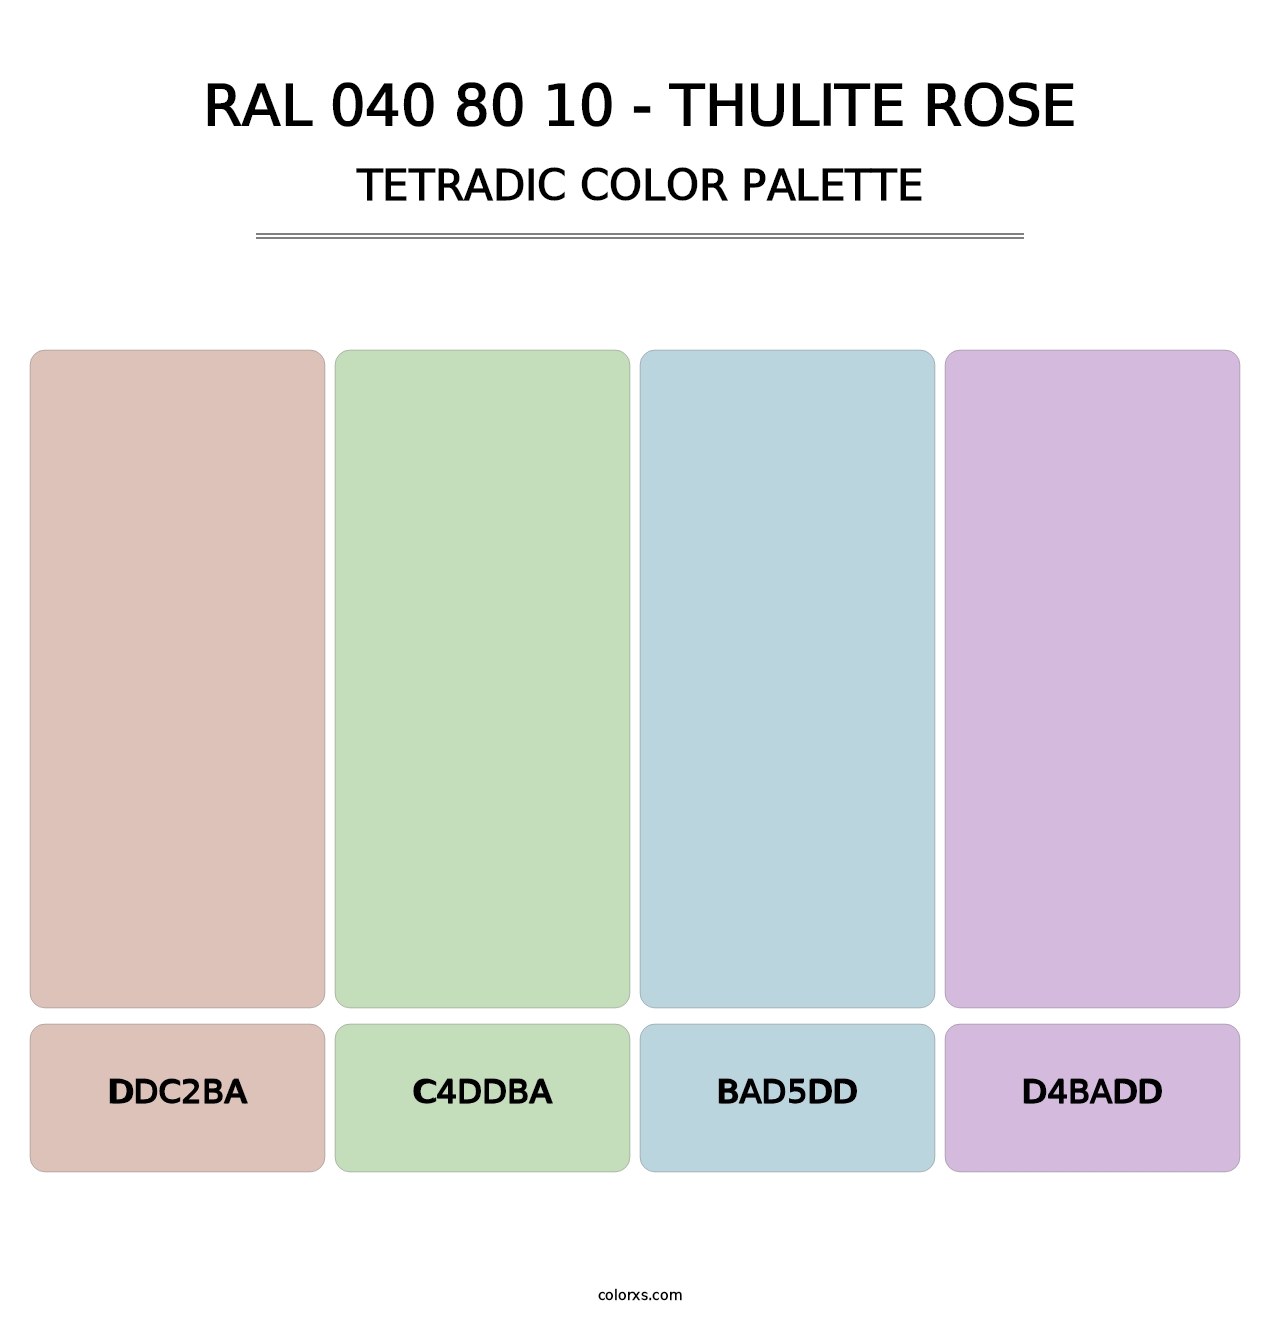 RAL 040 80 10 - Thulite Rose - Tetradic Color Palette